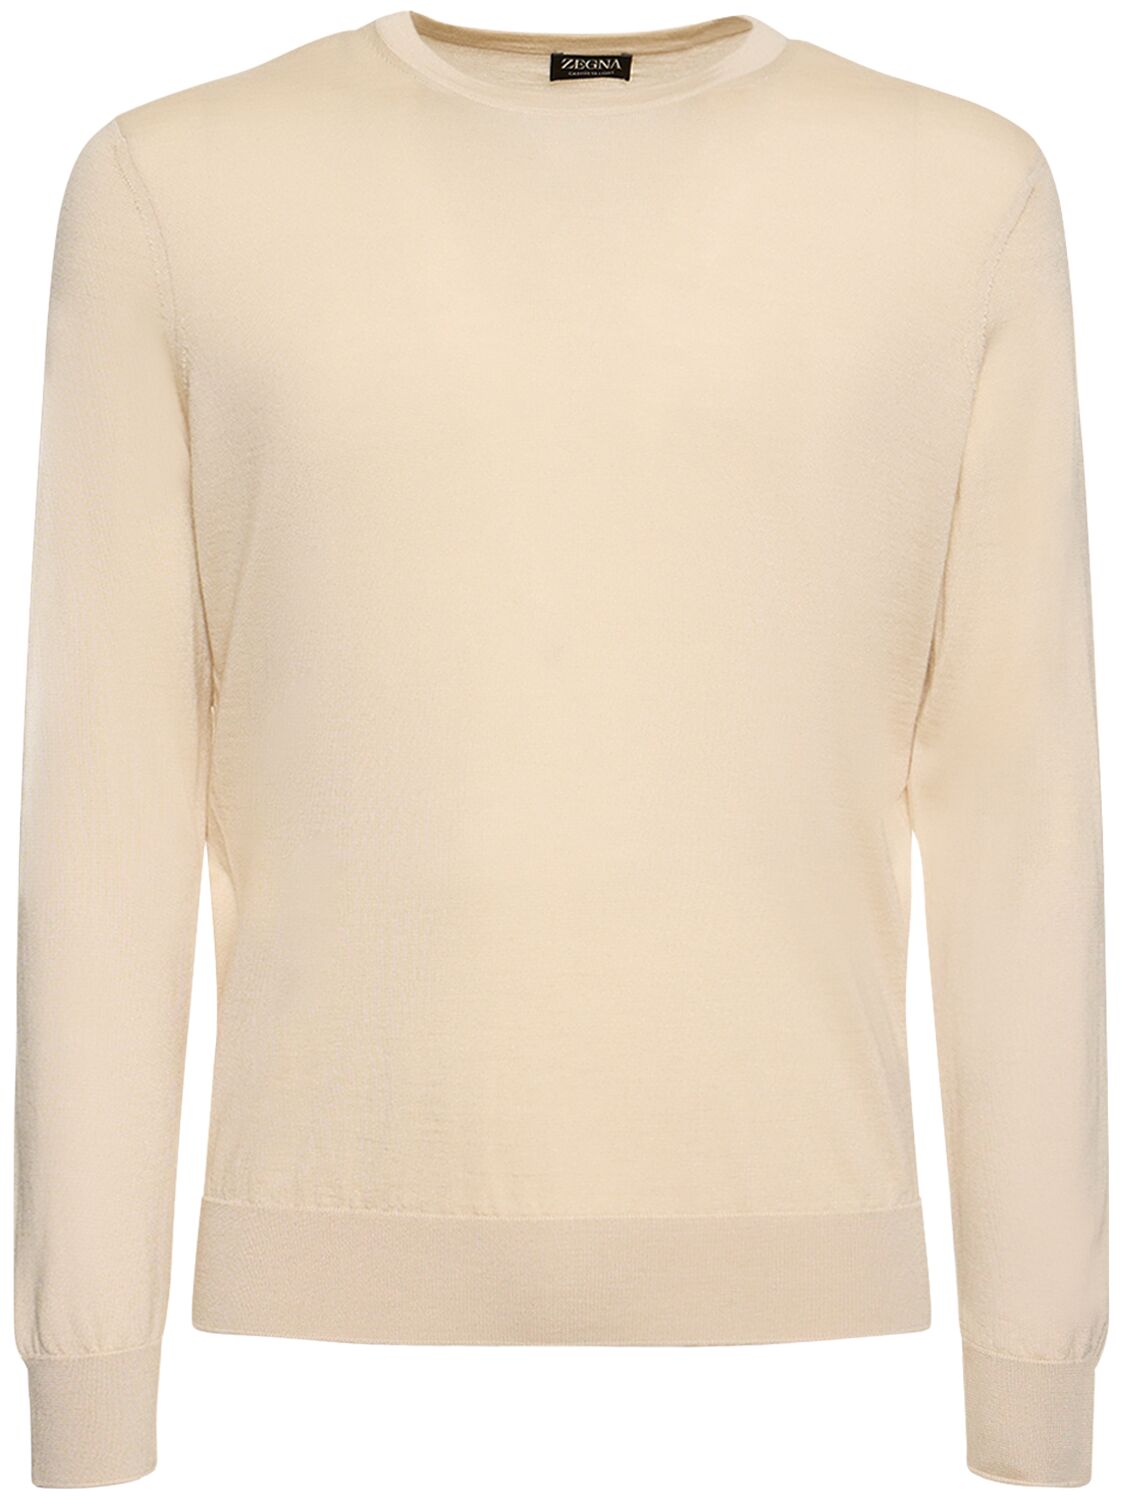 Zegna Cashmere & Silk Crewneck Sweater In Ivory